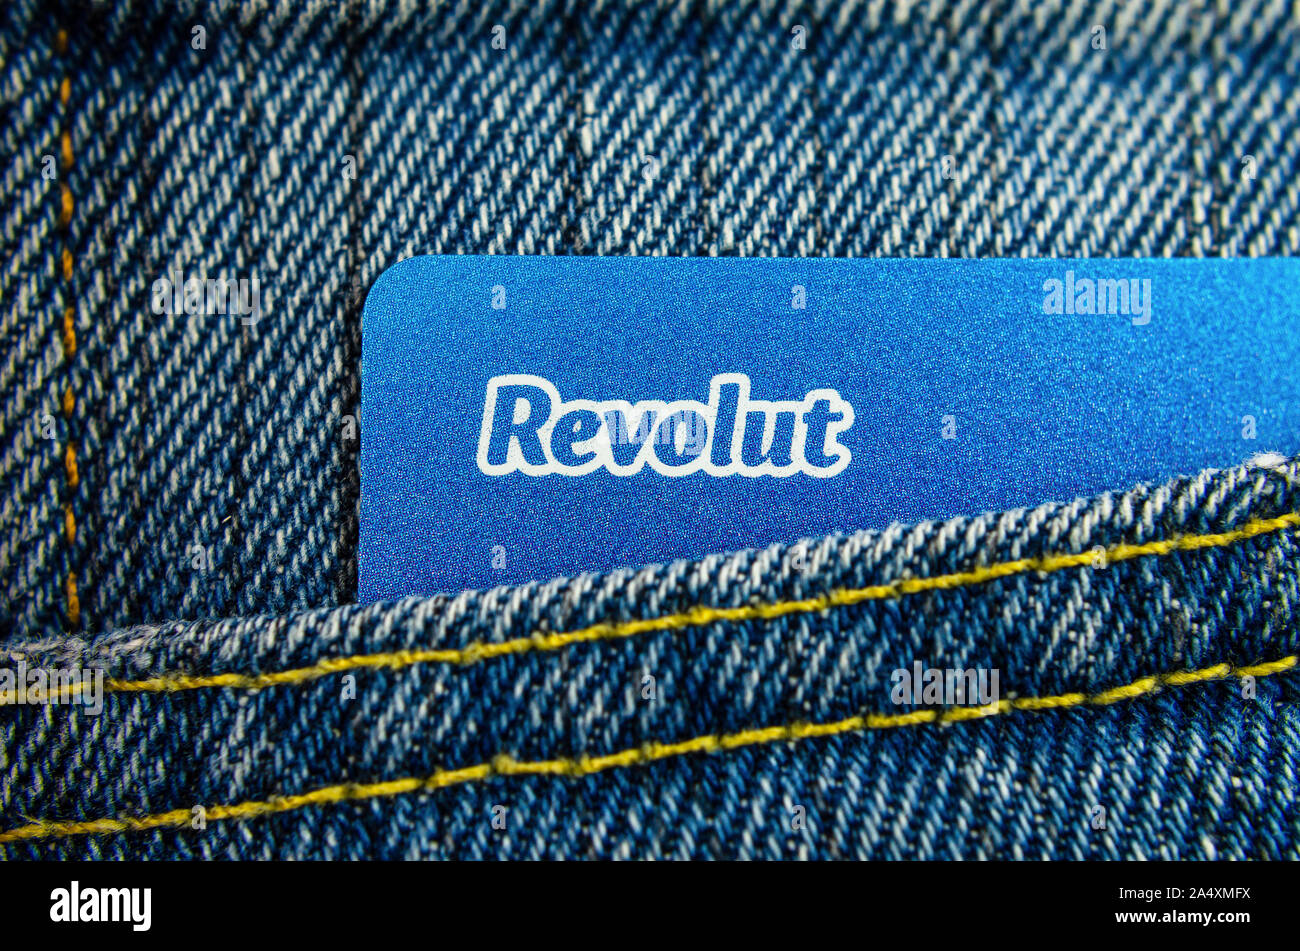 Revolut Bank Card in die Jeans Tasche. Makro Foto. Stockfoto